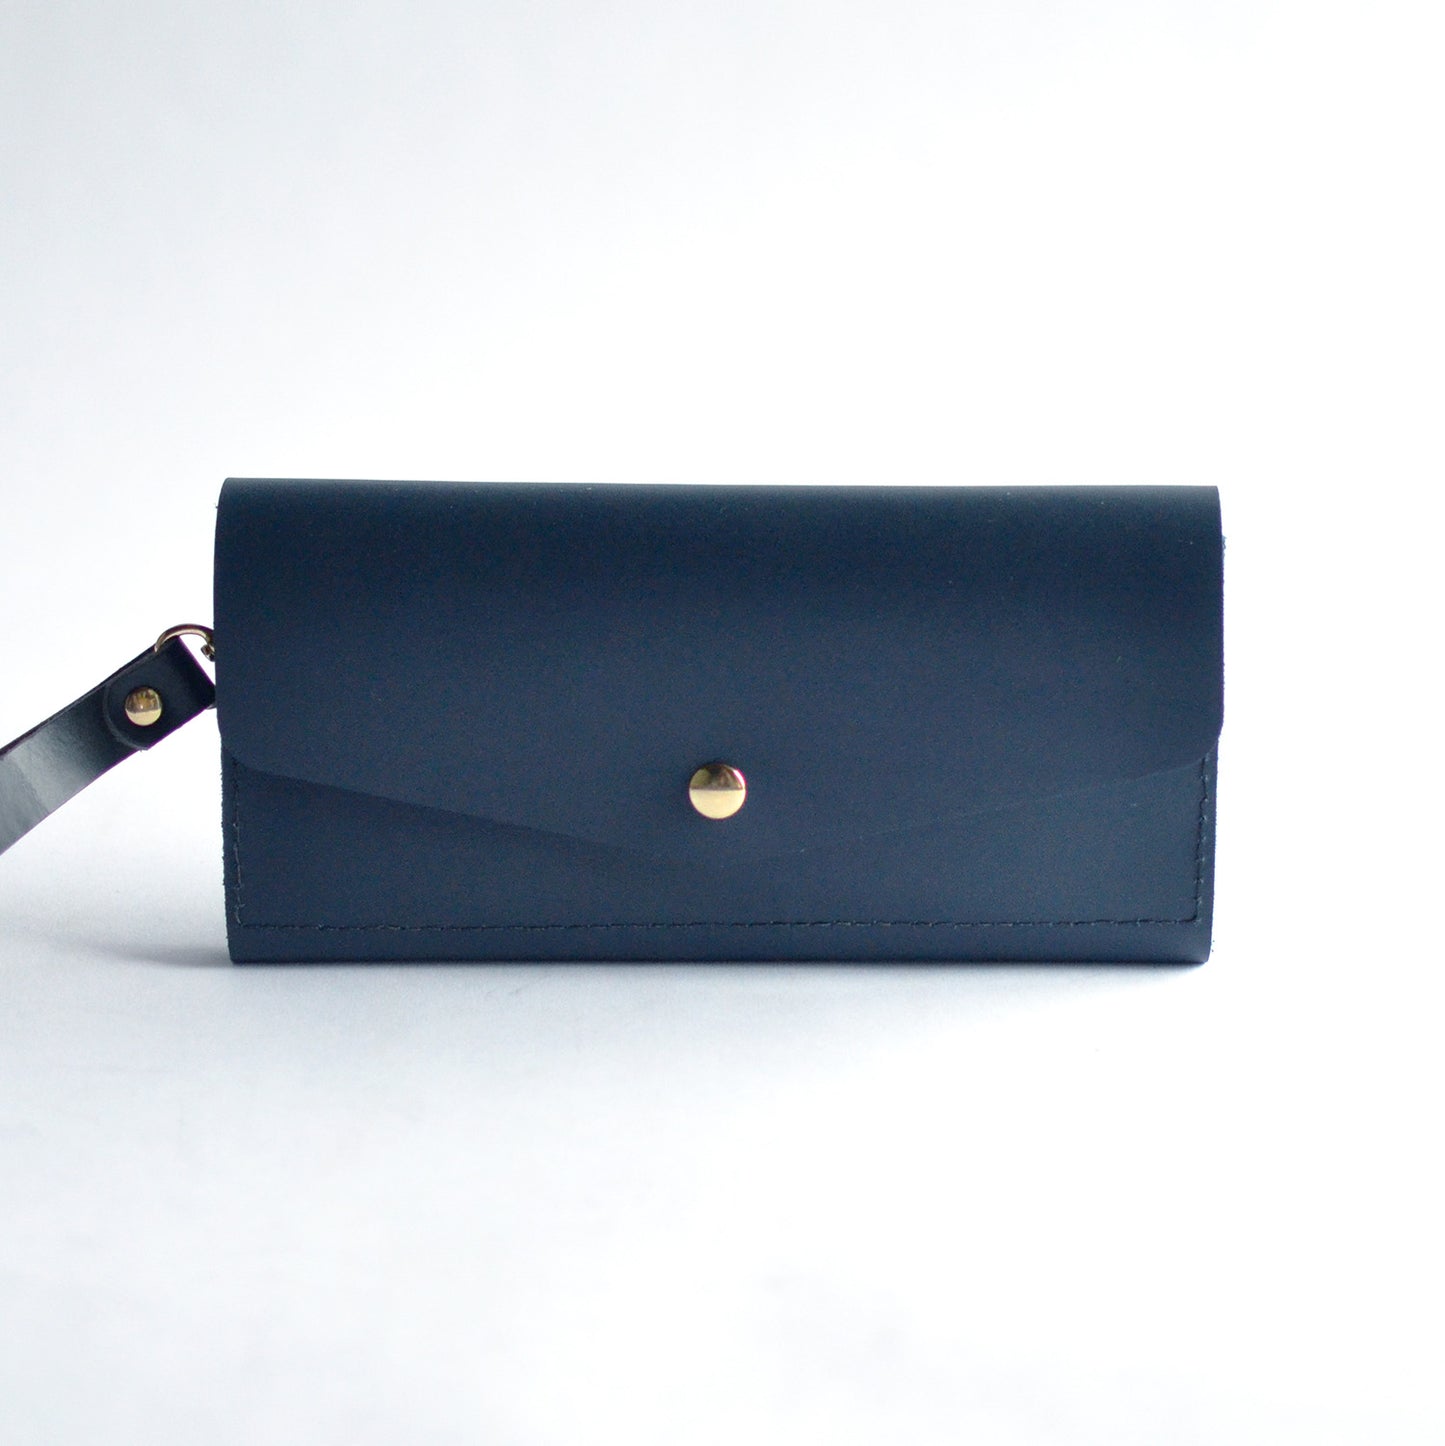 Wristlet Wallet Clutch - Navy Blue Leather